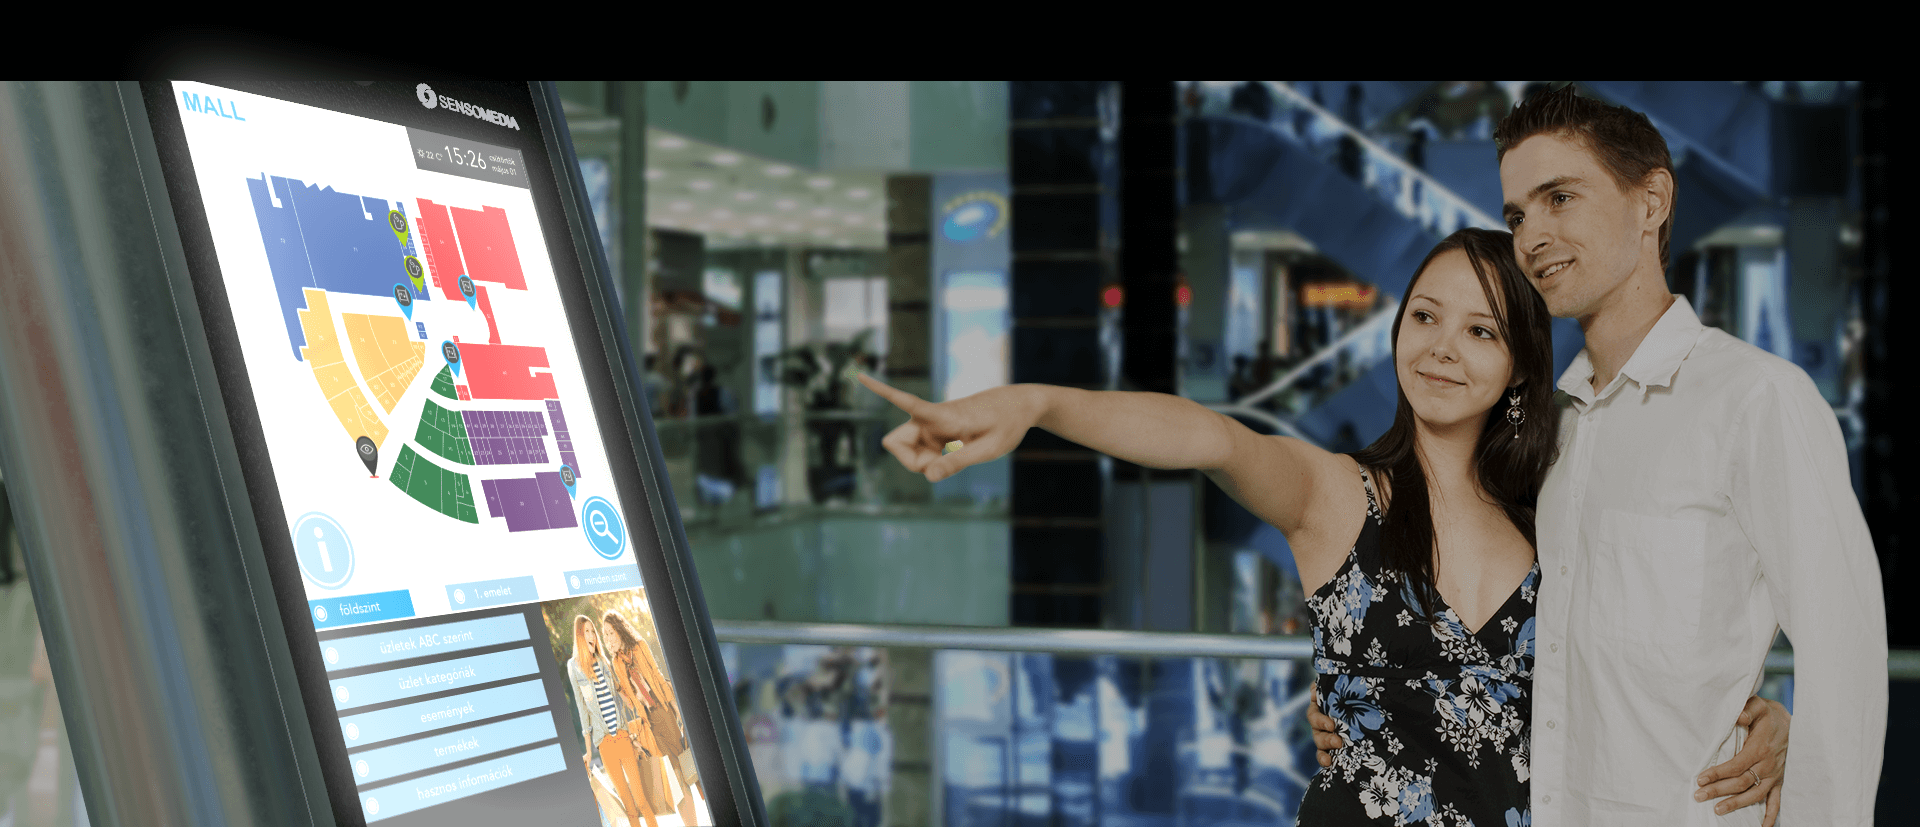 Digital Signage 2.0. in malls